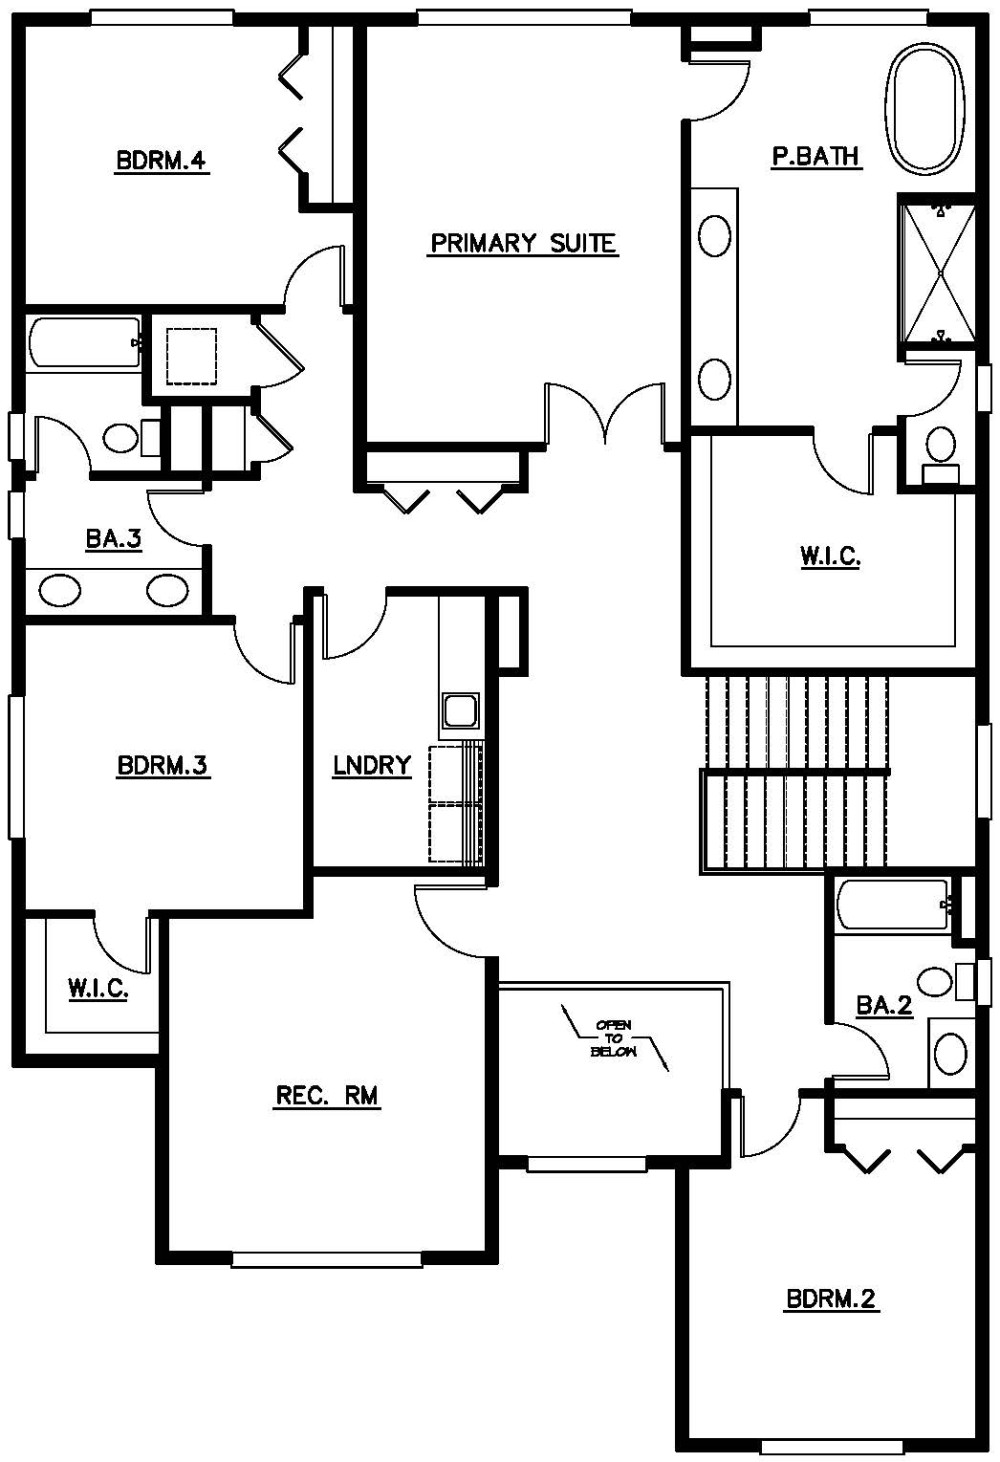 Upper Floor Plan floorplan for the Shearwater - Lot 9 home